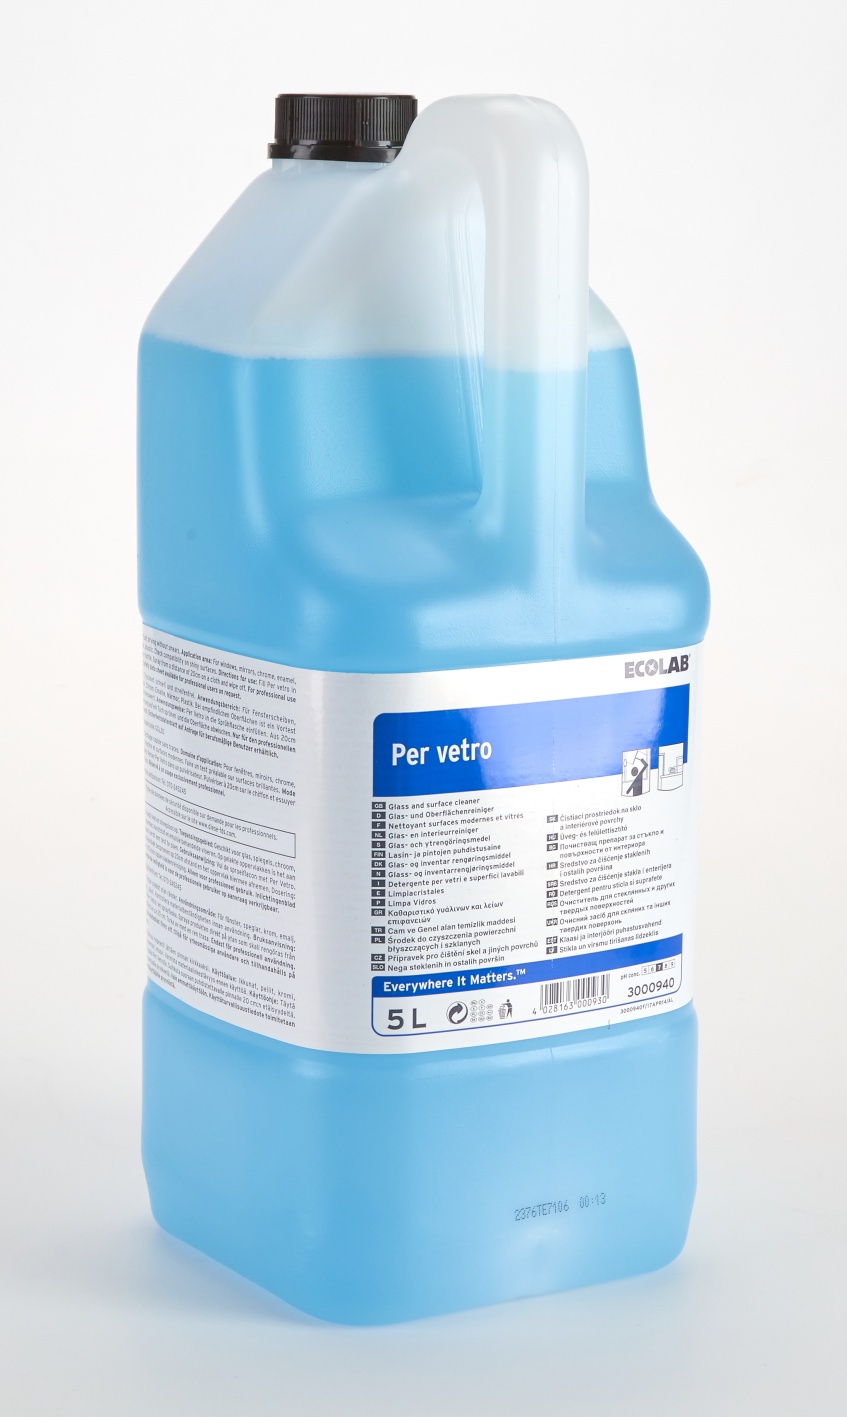 P&G detergente professionale per vetri 5 litri in offerta - PapoLab